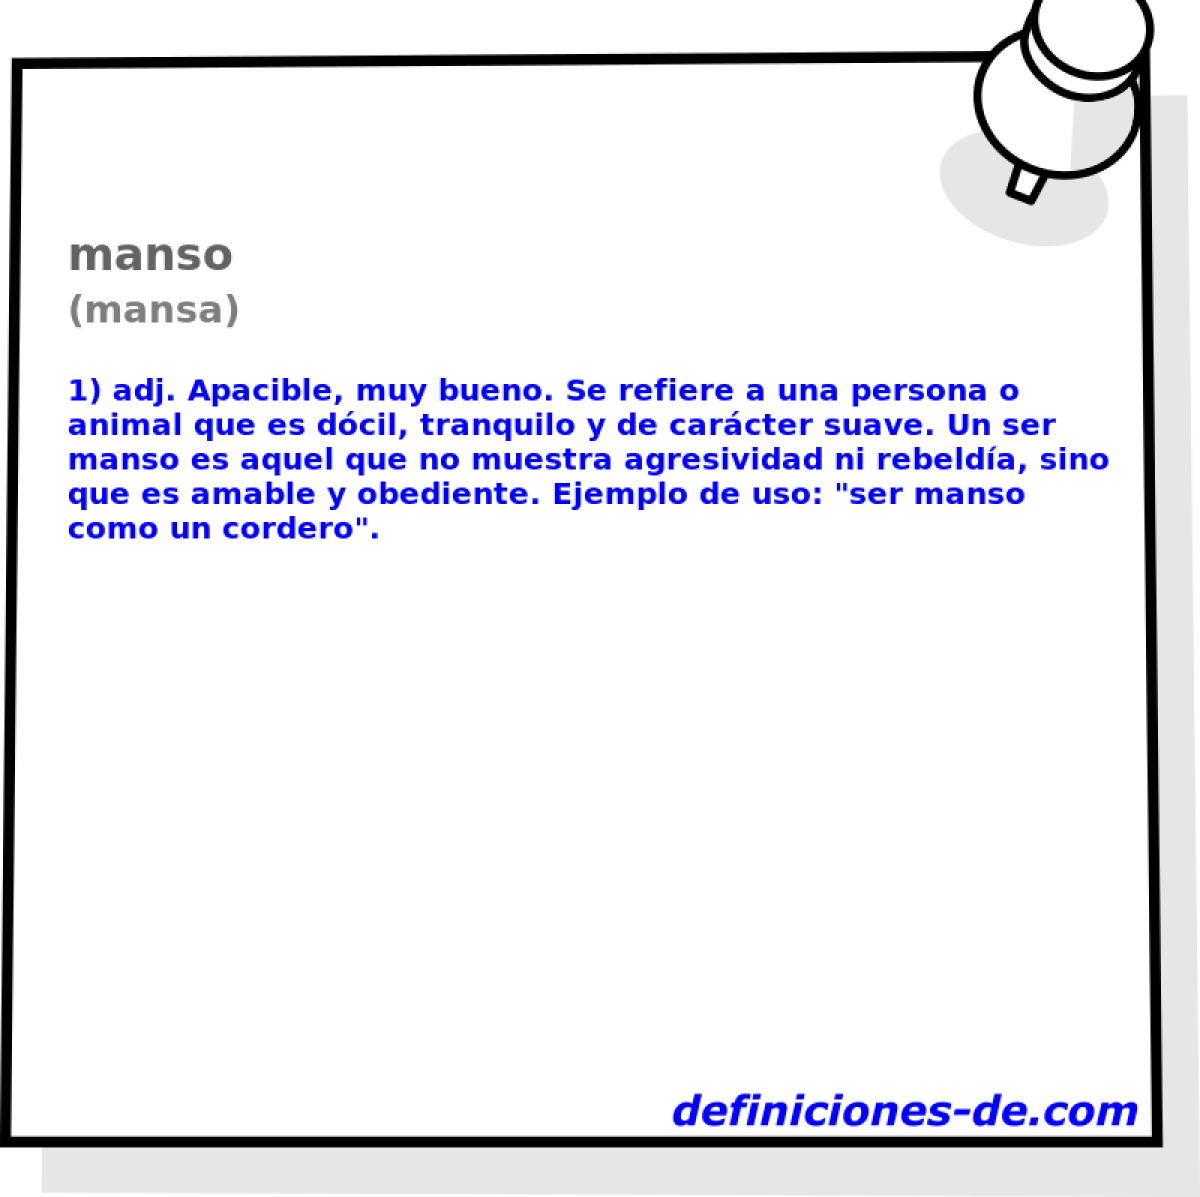 manso (mansa)